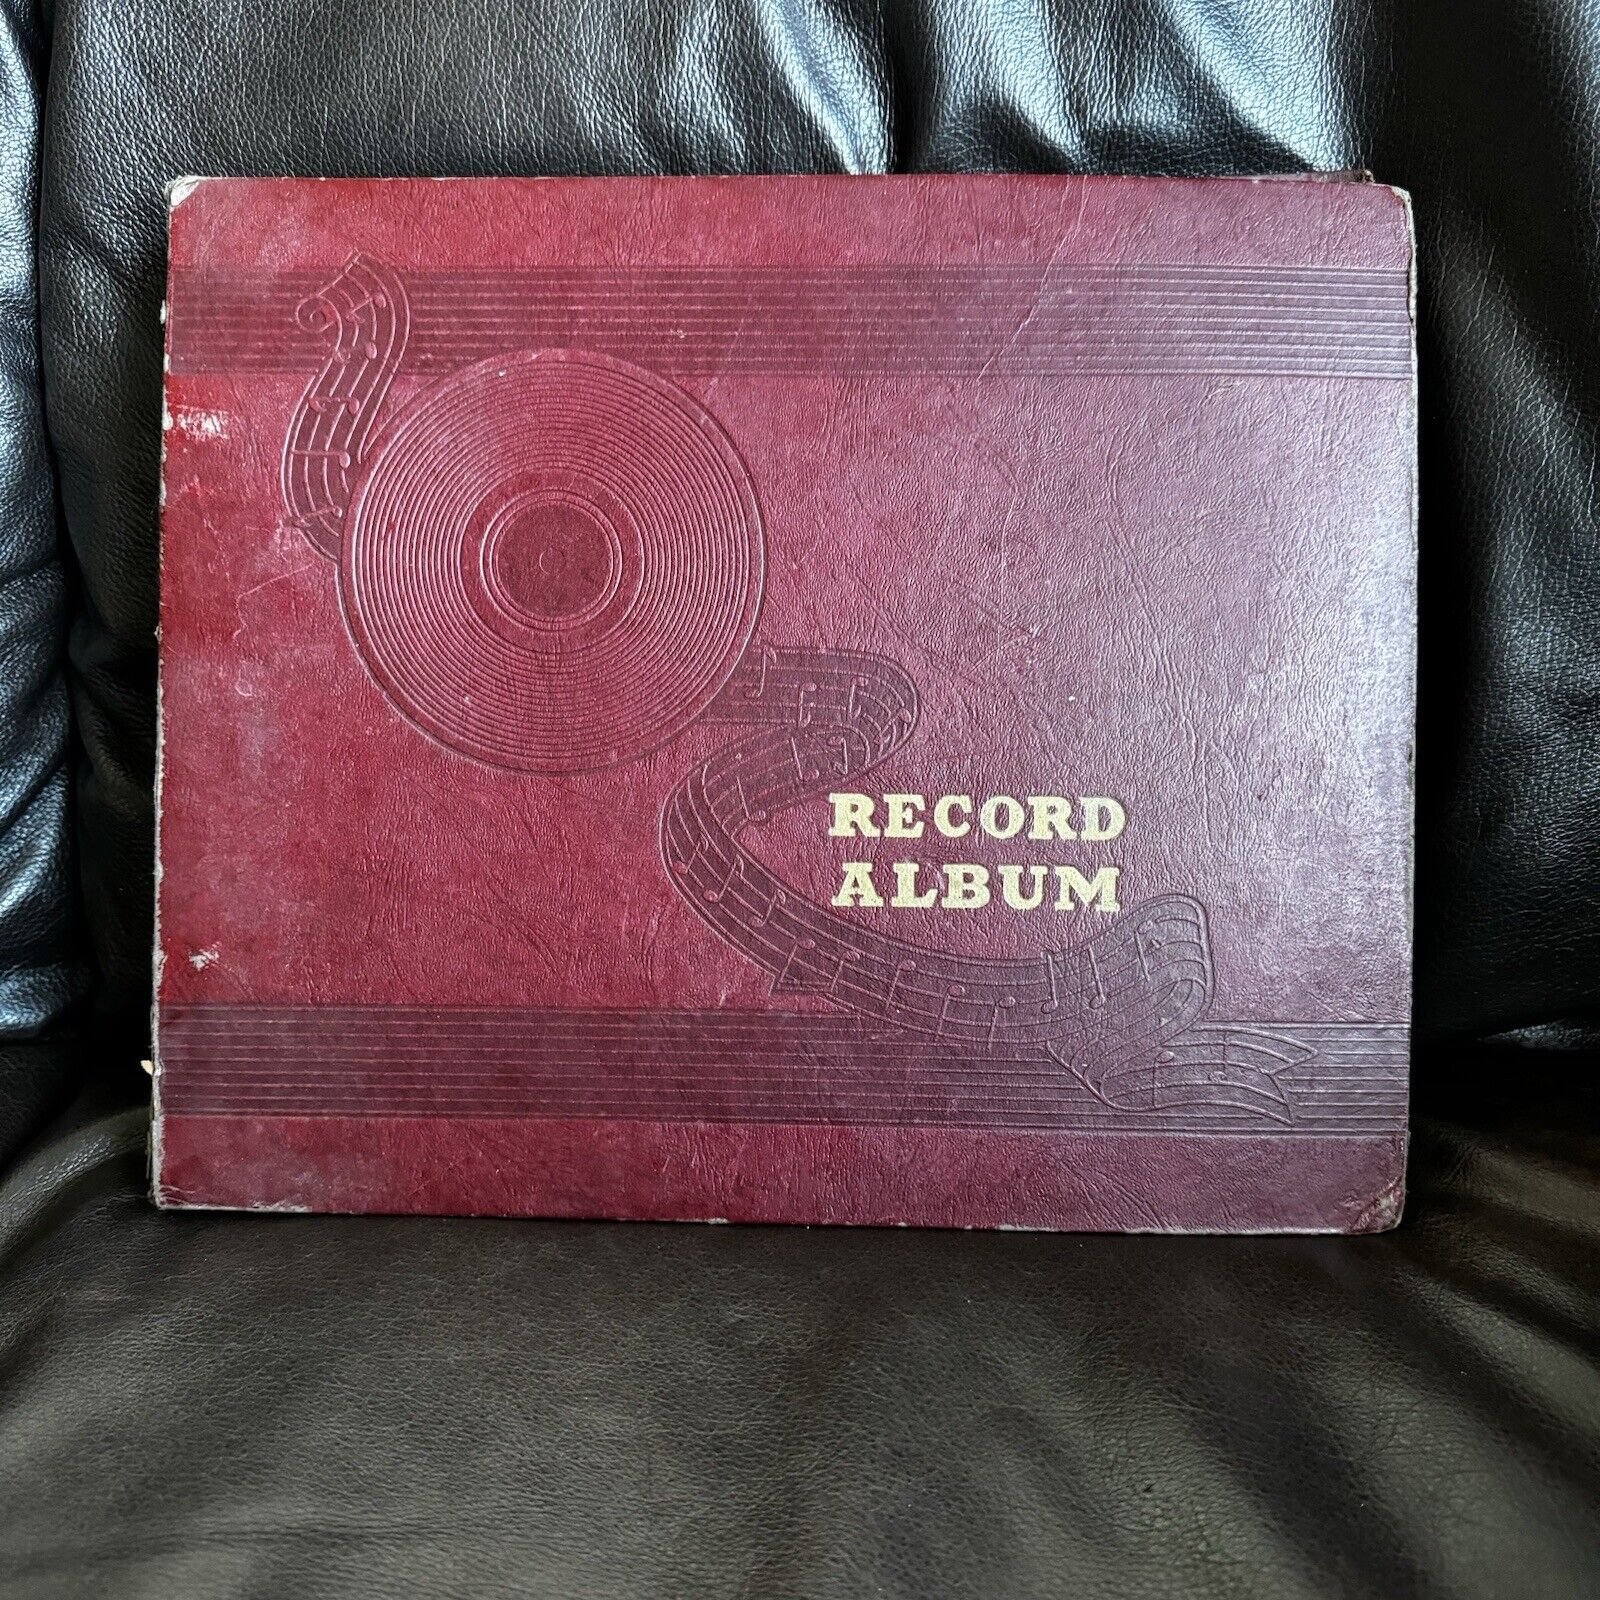 9 Vintage 78 RPM Records In Album Storage Book - Captial & Columbia 18 Songs